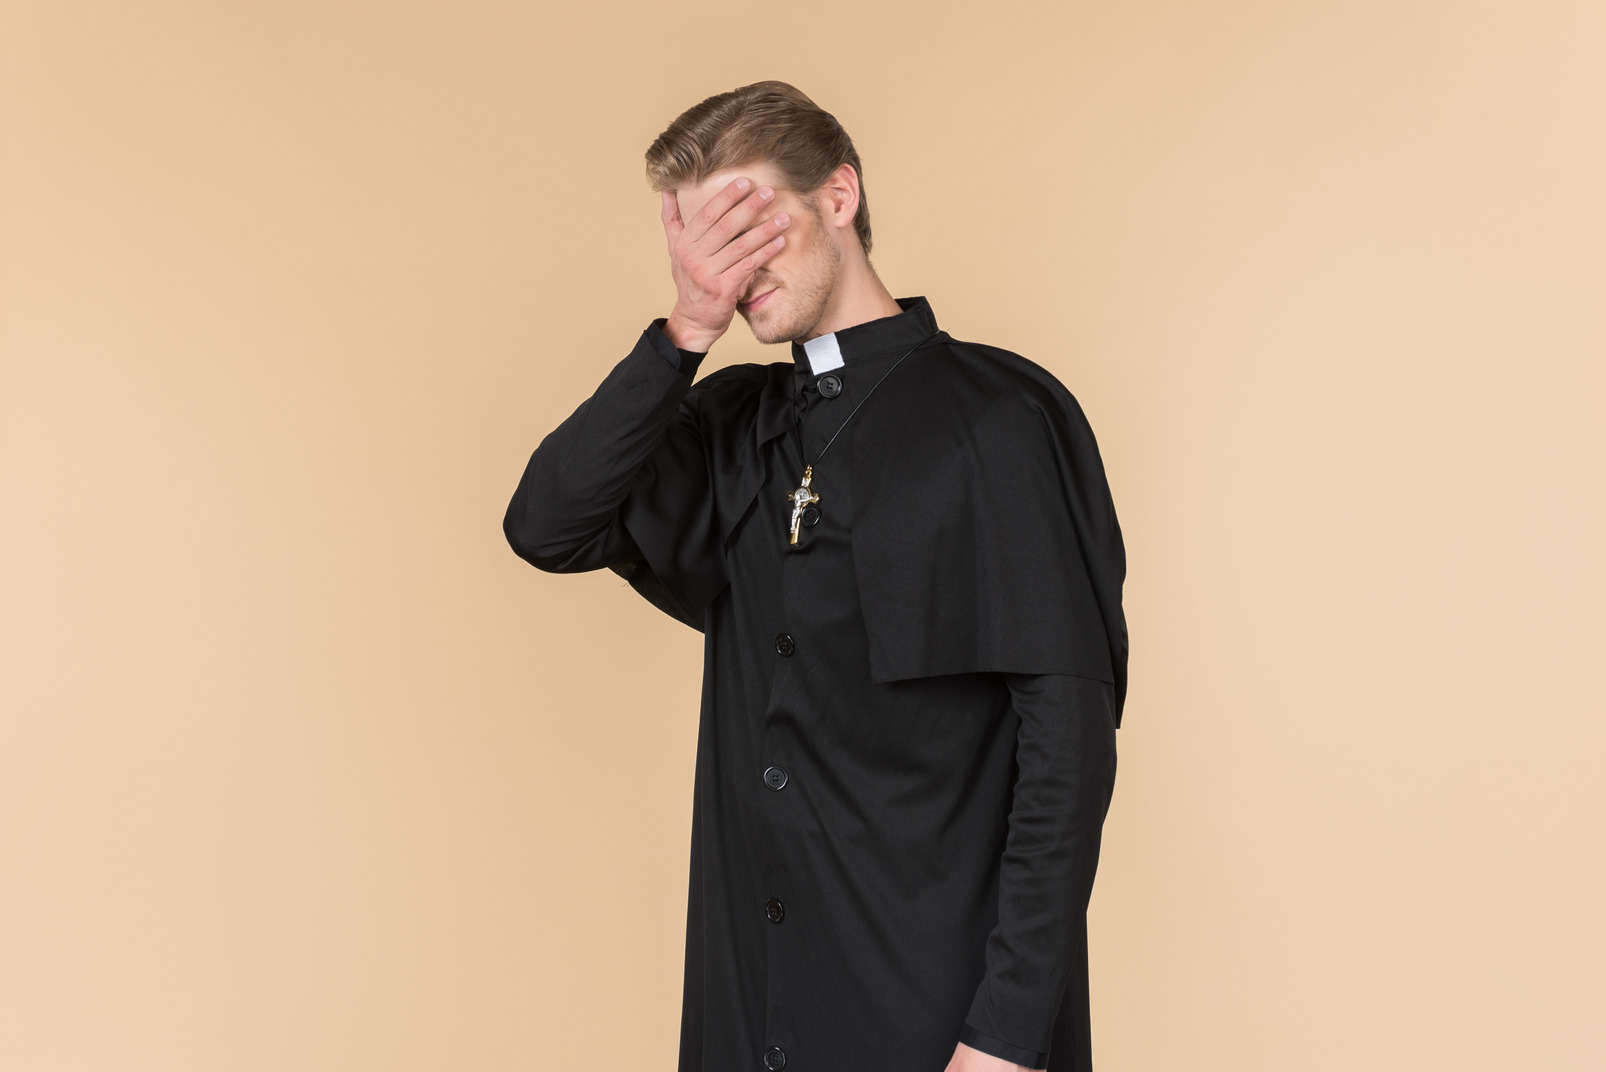 Catholic priest holding cross with cross elongated